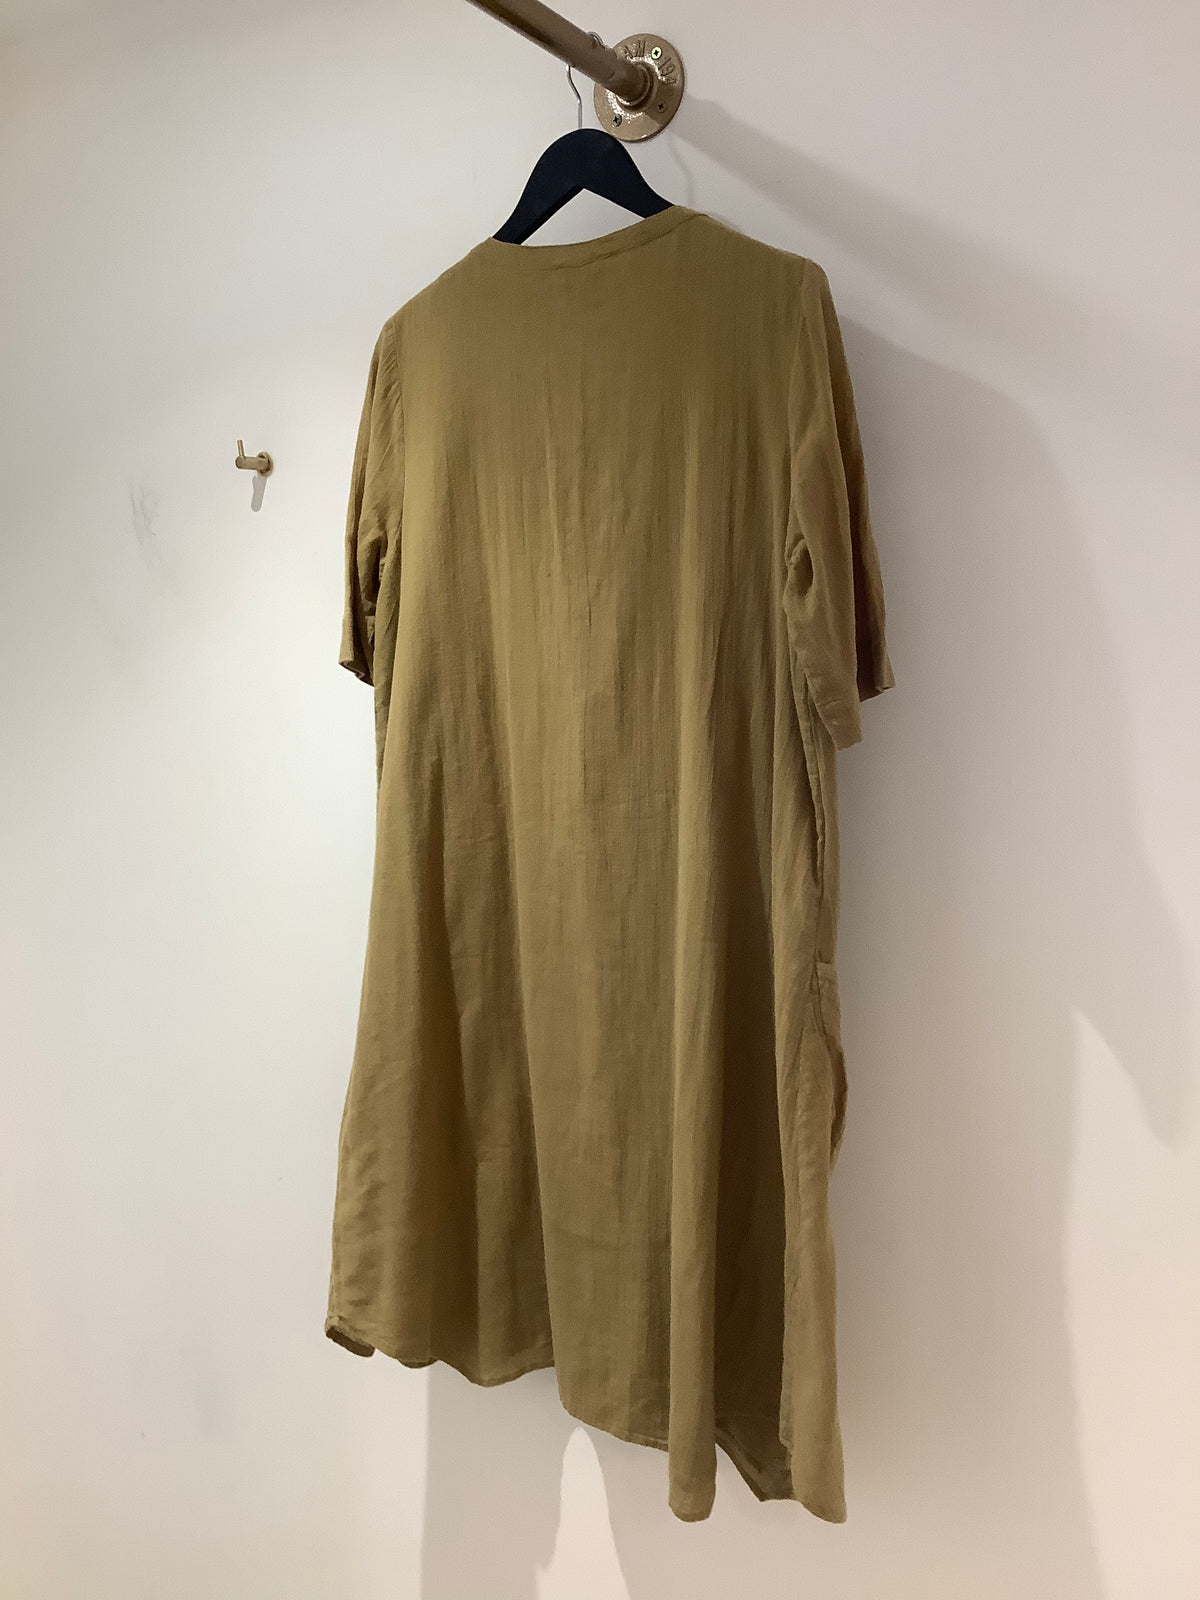 Wrap cotton tunic dress Olive Size 14